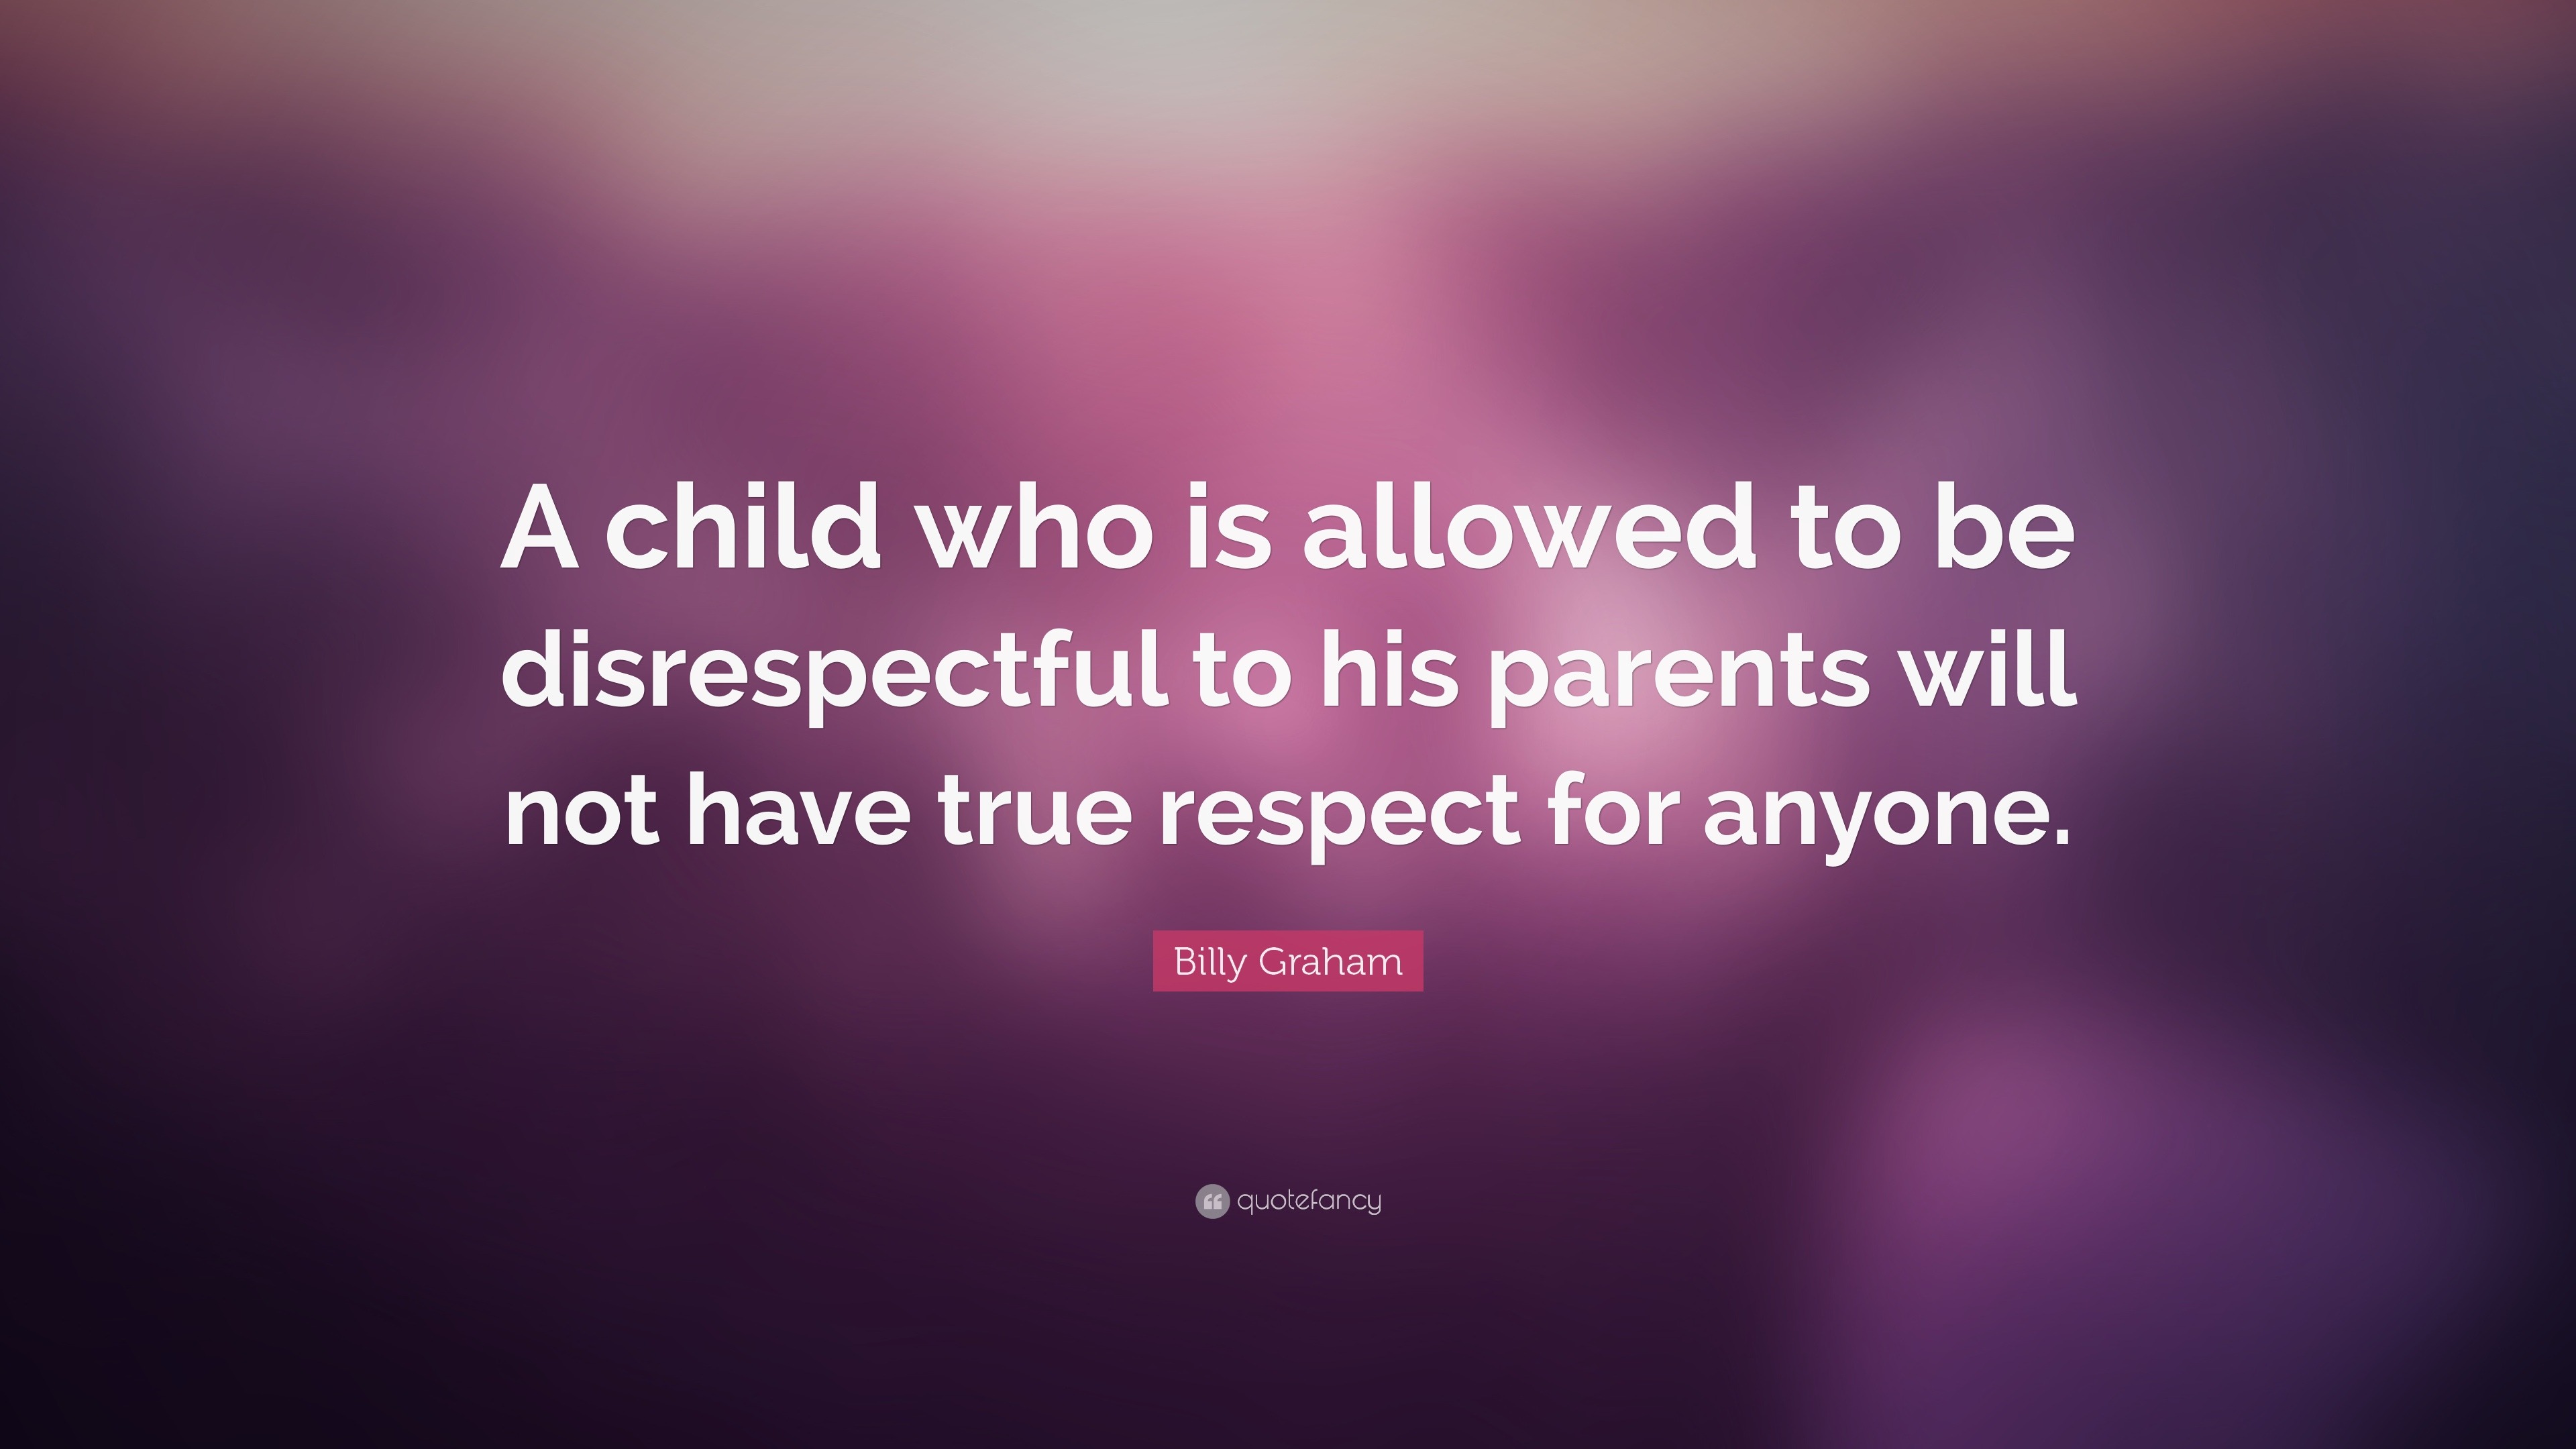 why do children disrespect their parents